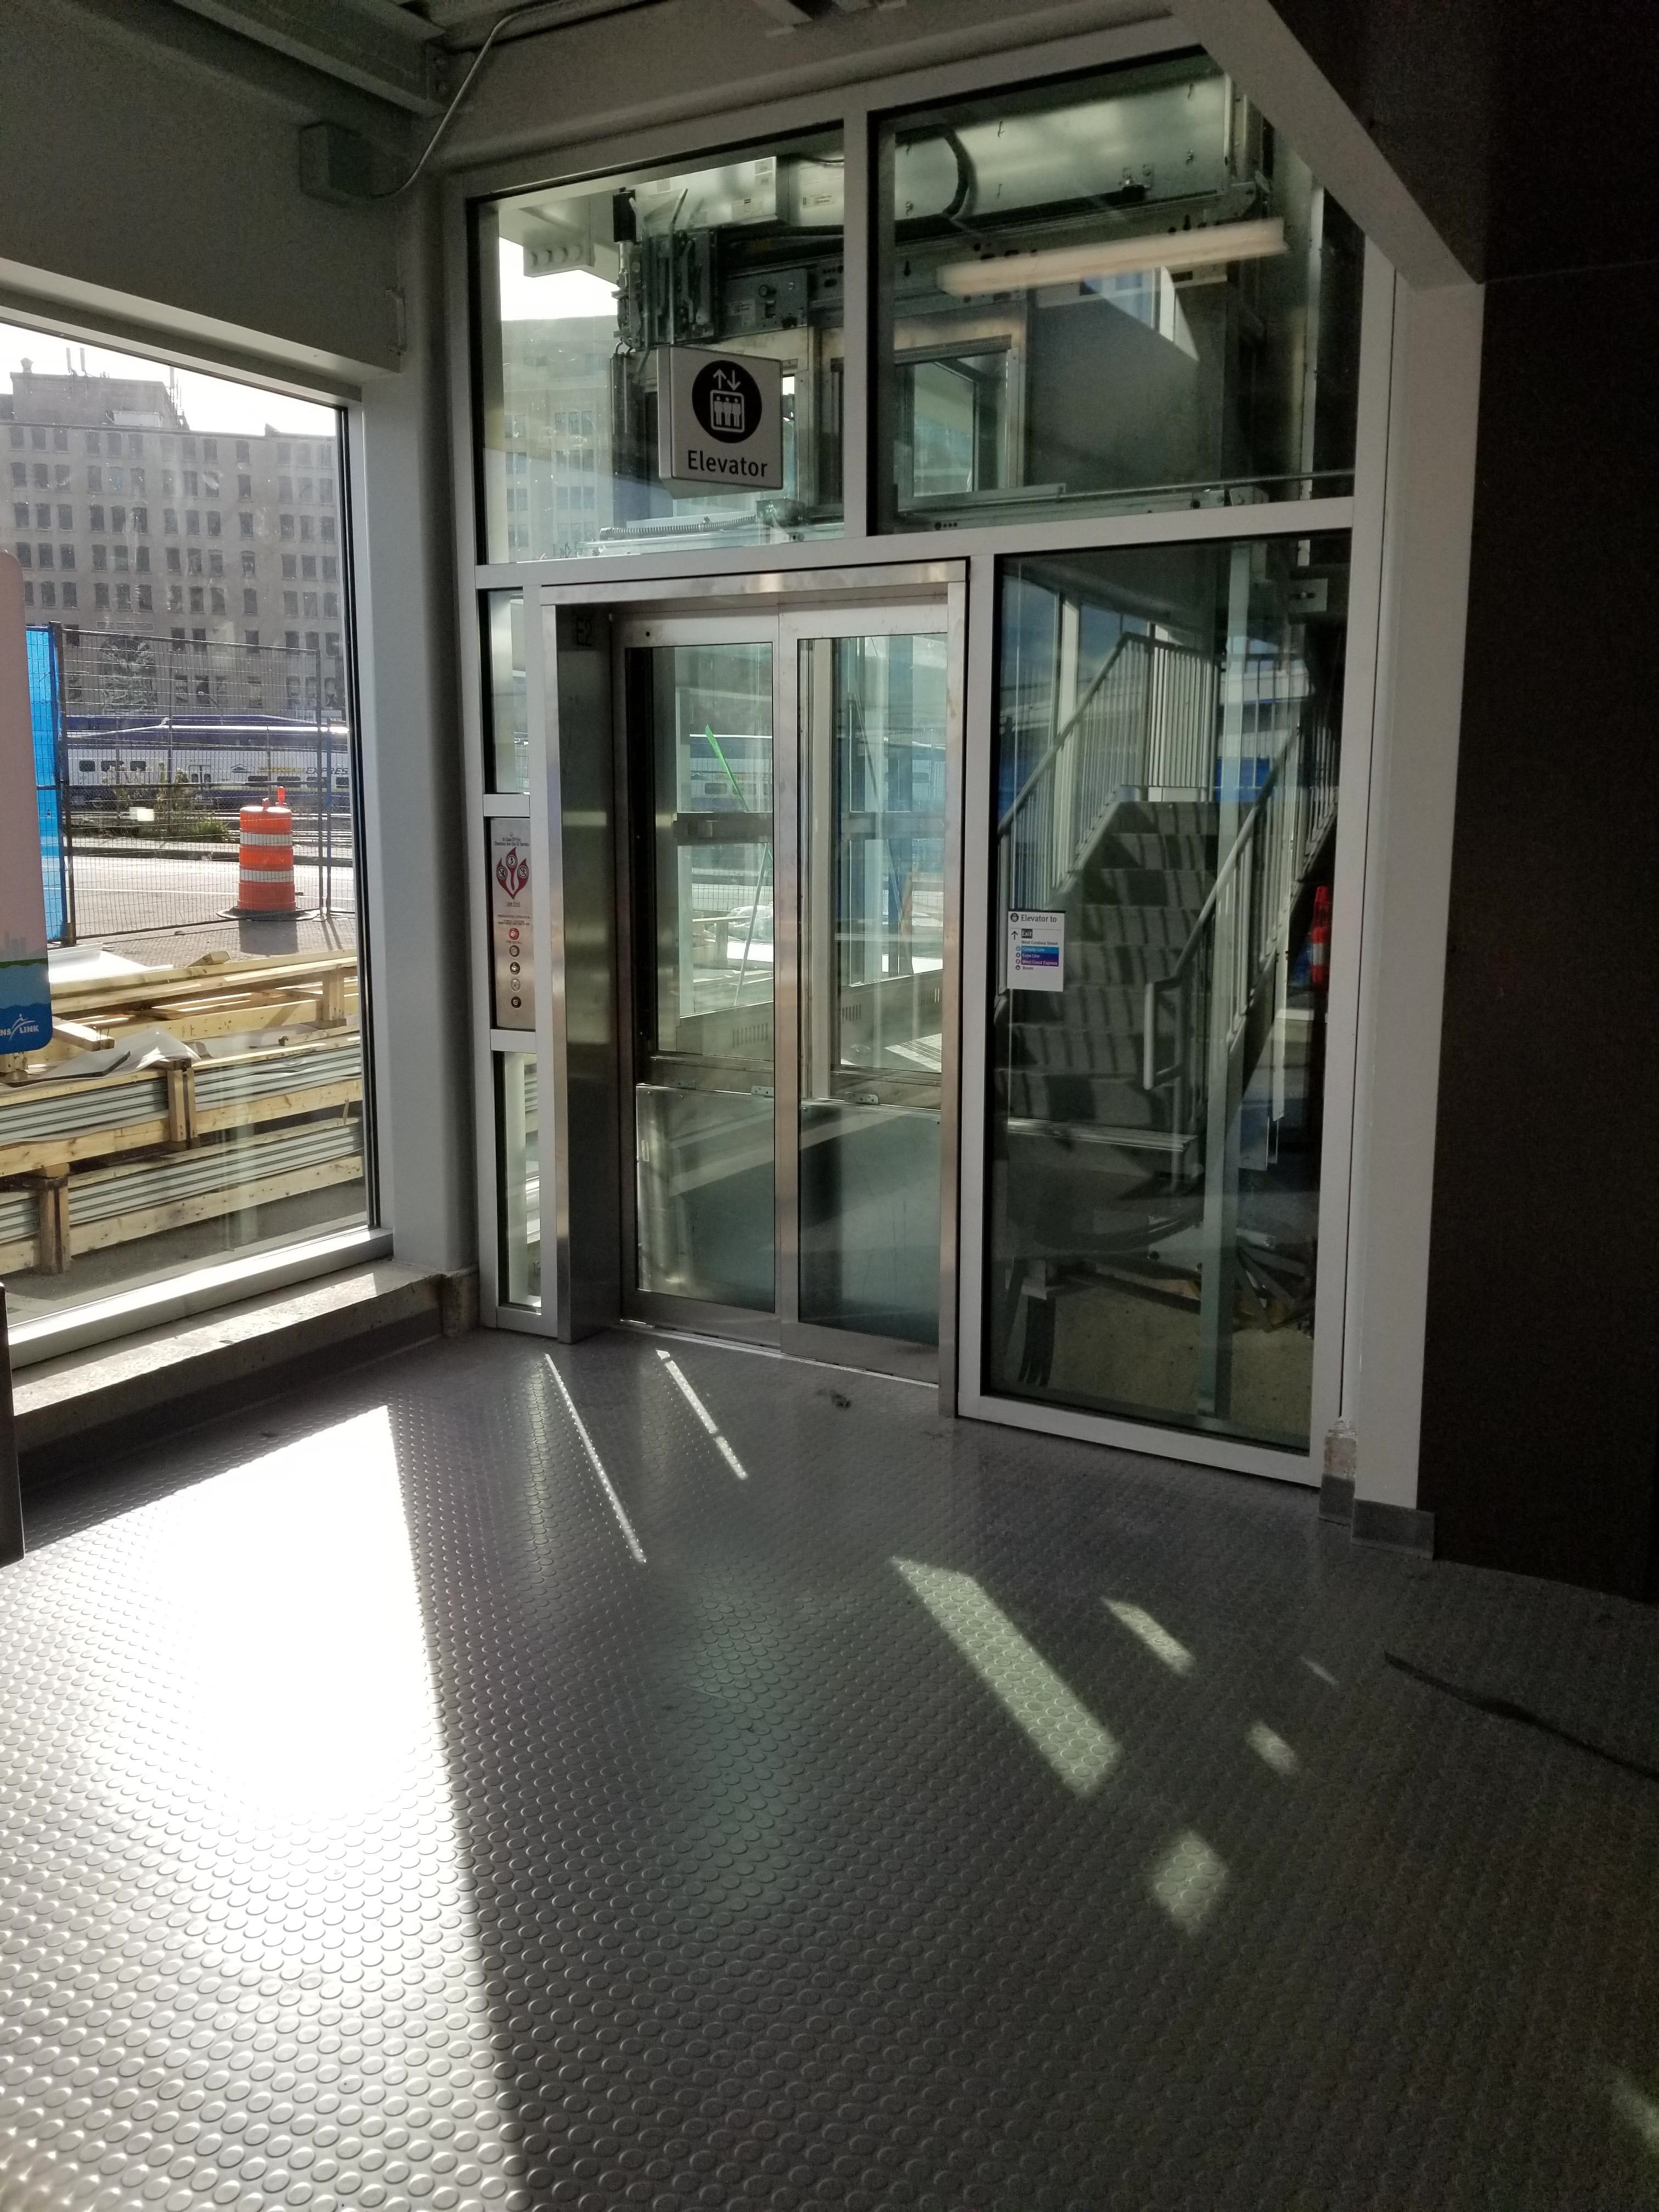 New SeaBus Elevator